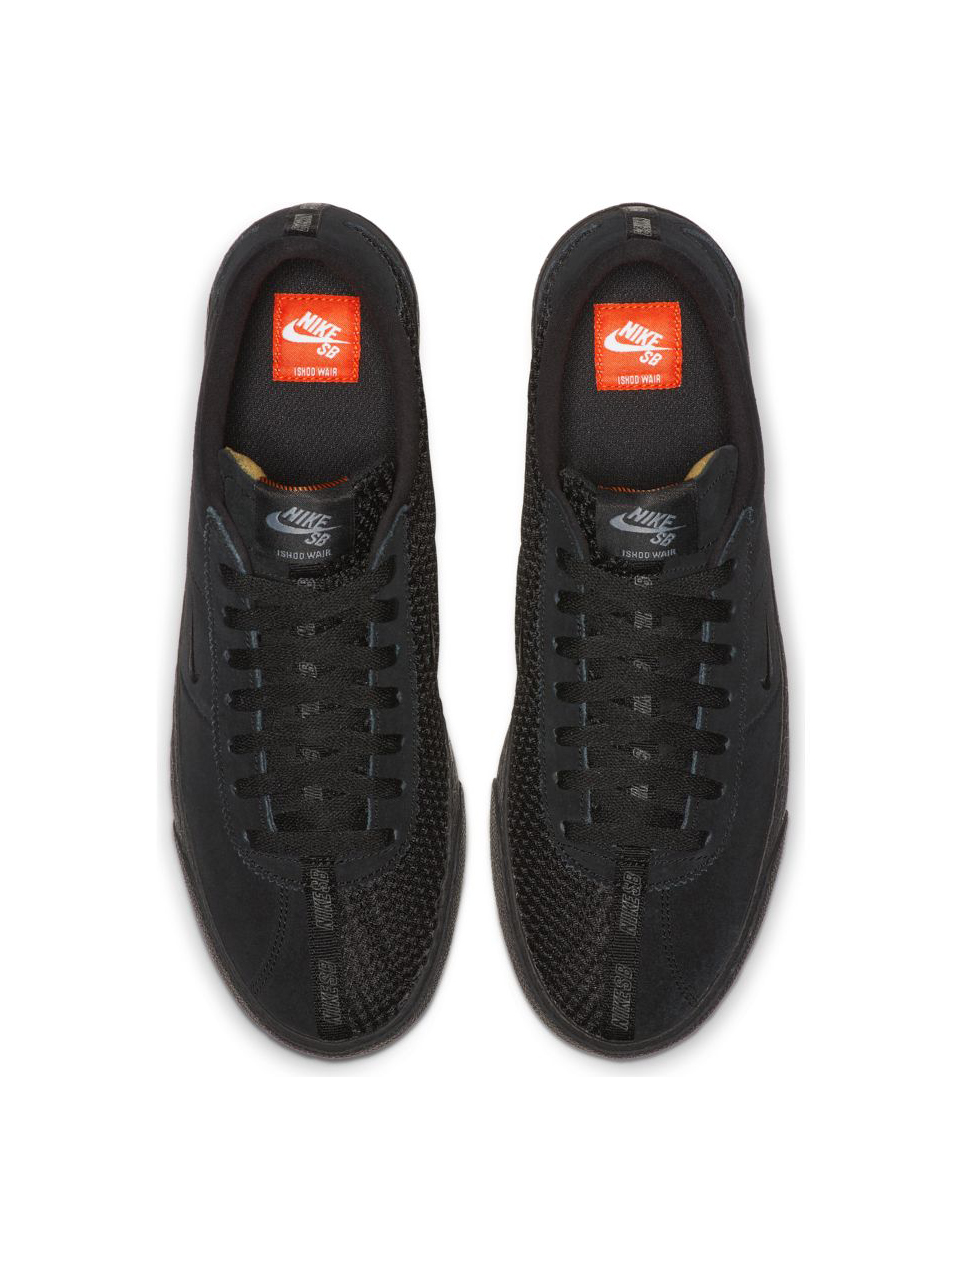 Nike SB Bruin Iso - Black / Black Ishod 